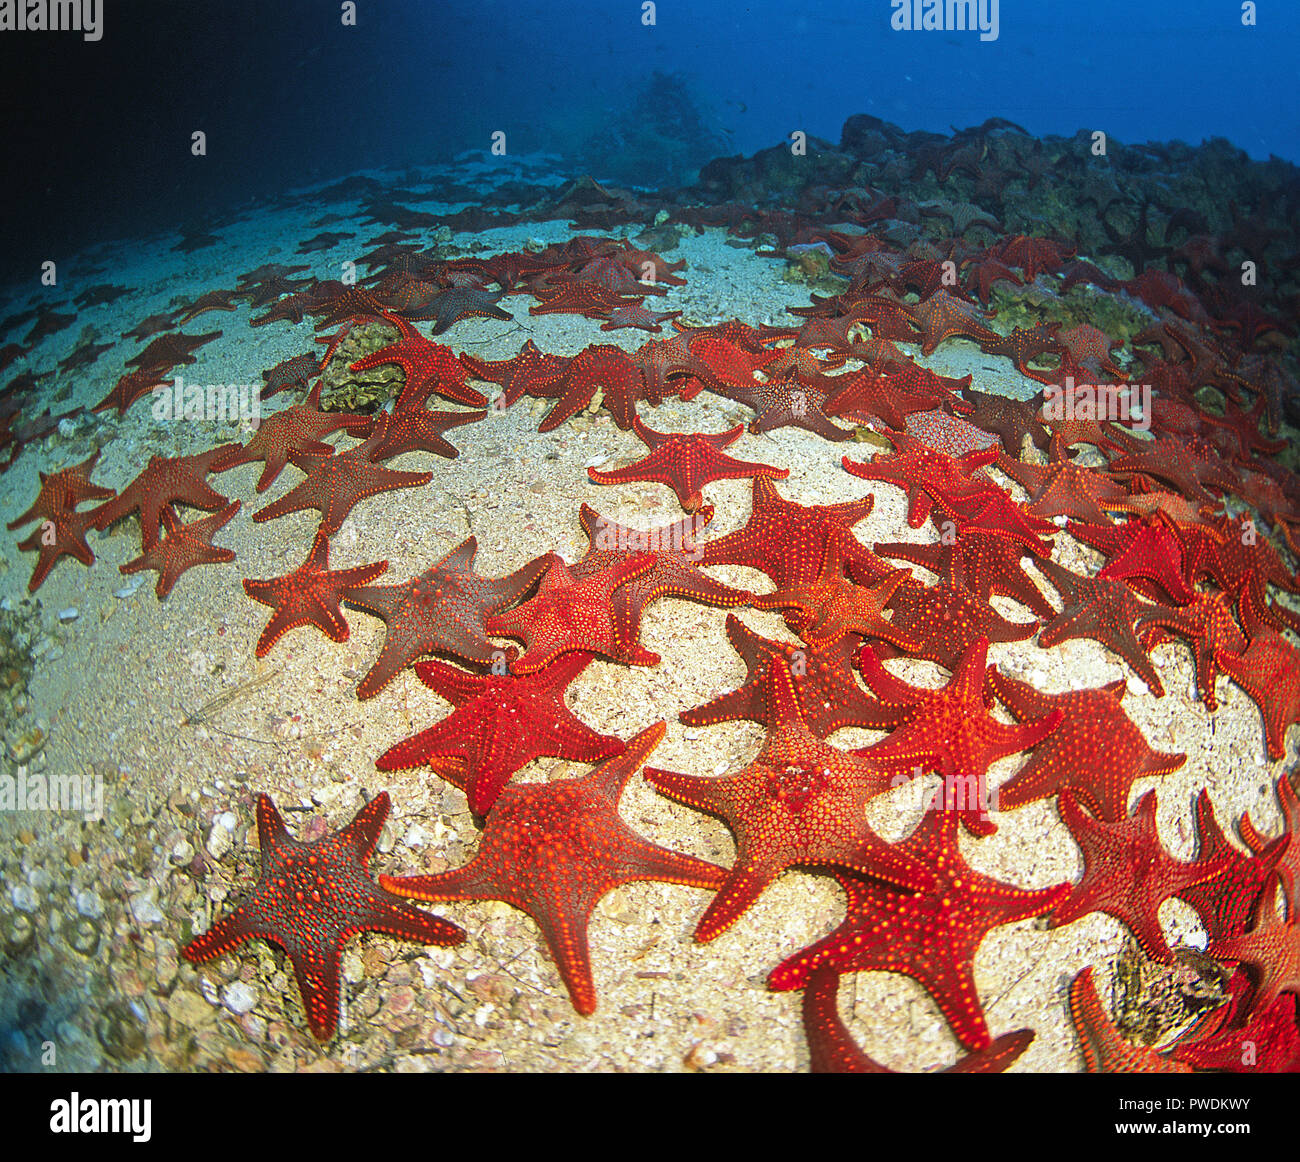 Vielen Panamic Sitzkissen Sea Stars, Meer, währenddem der Star oder Galapagos Sea Star (Pentaceraster cumingi), Galapagos, Ecuador Stockfoto